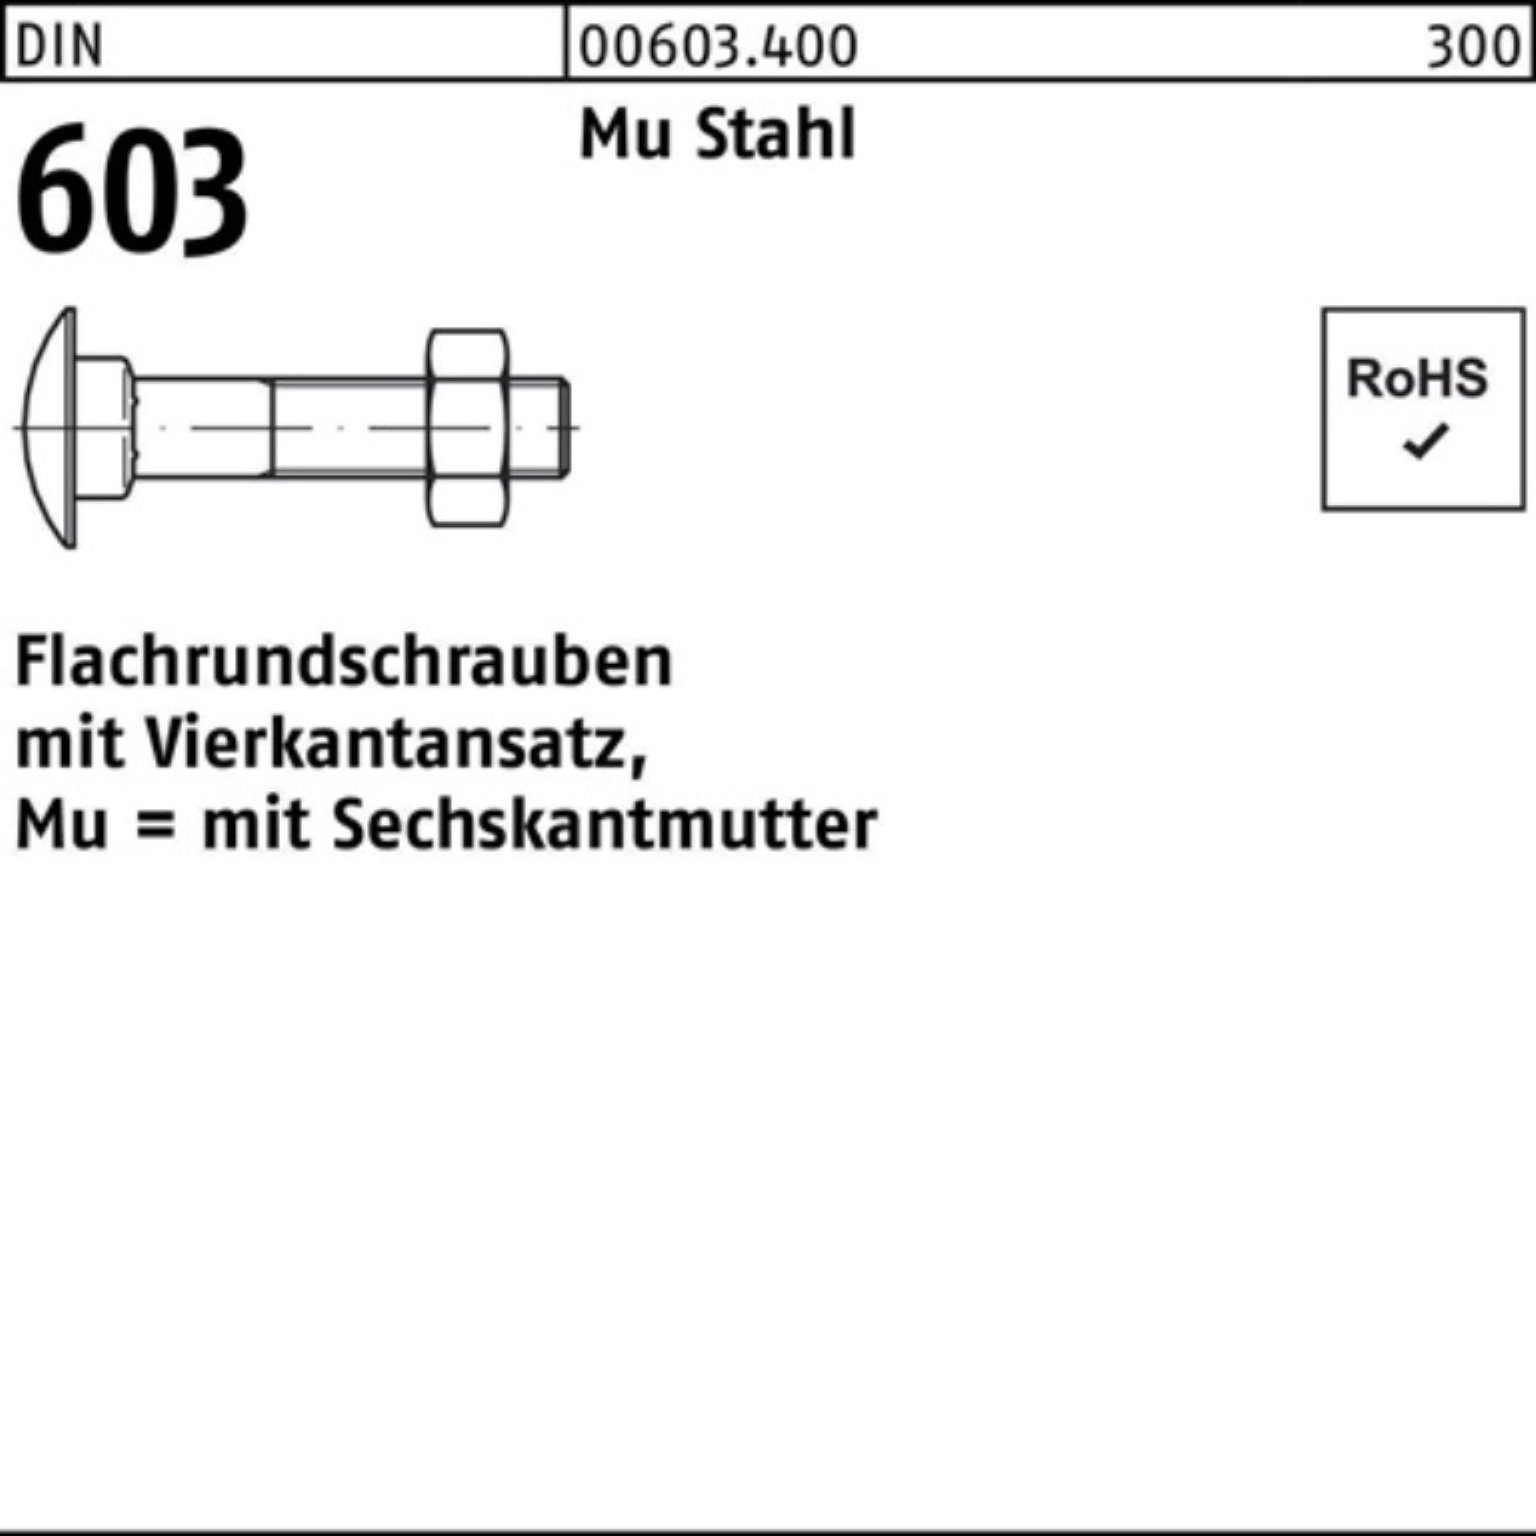 DIN Schraube M20x200 Vierkantansatz/6-ktmutter Flachrundschraube Reyher Pack 603 100er